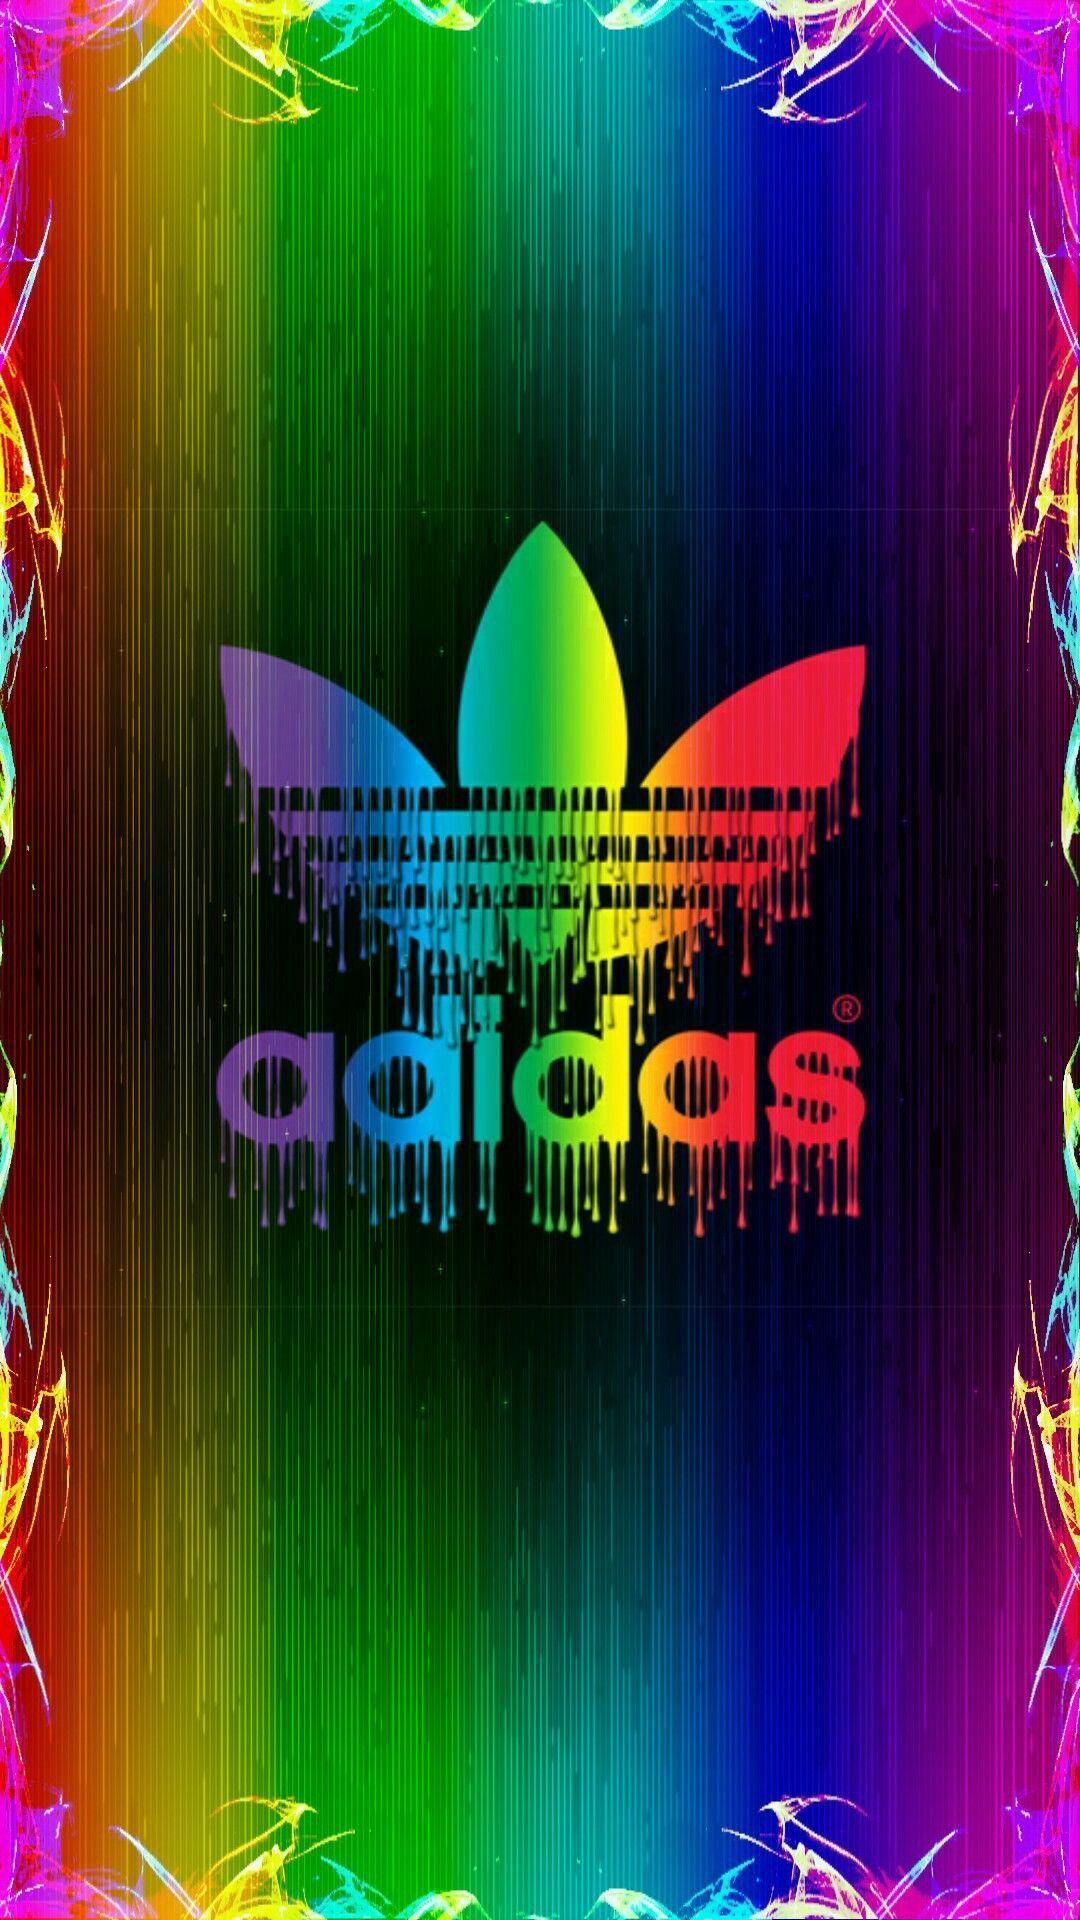 adidas colourful logo